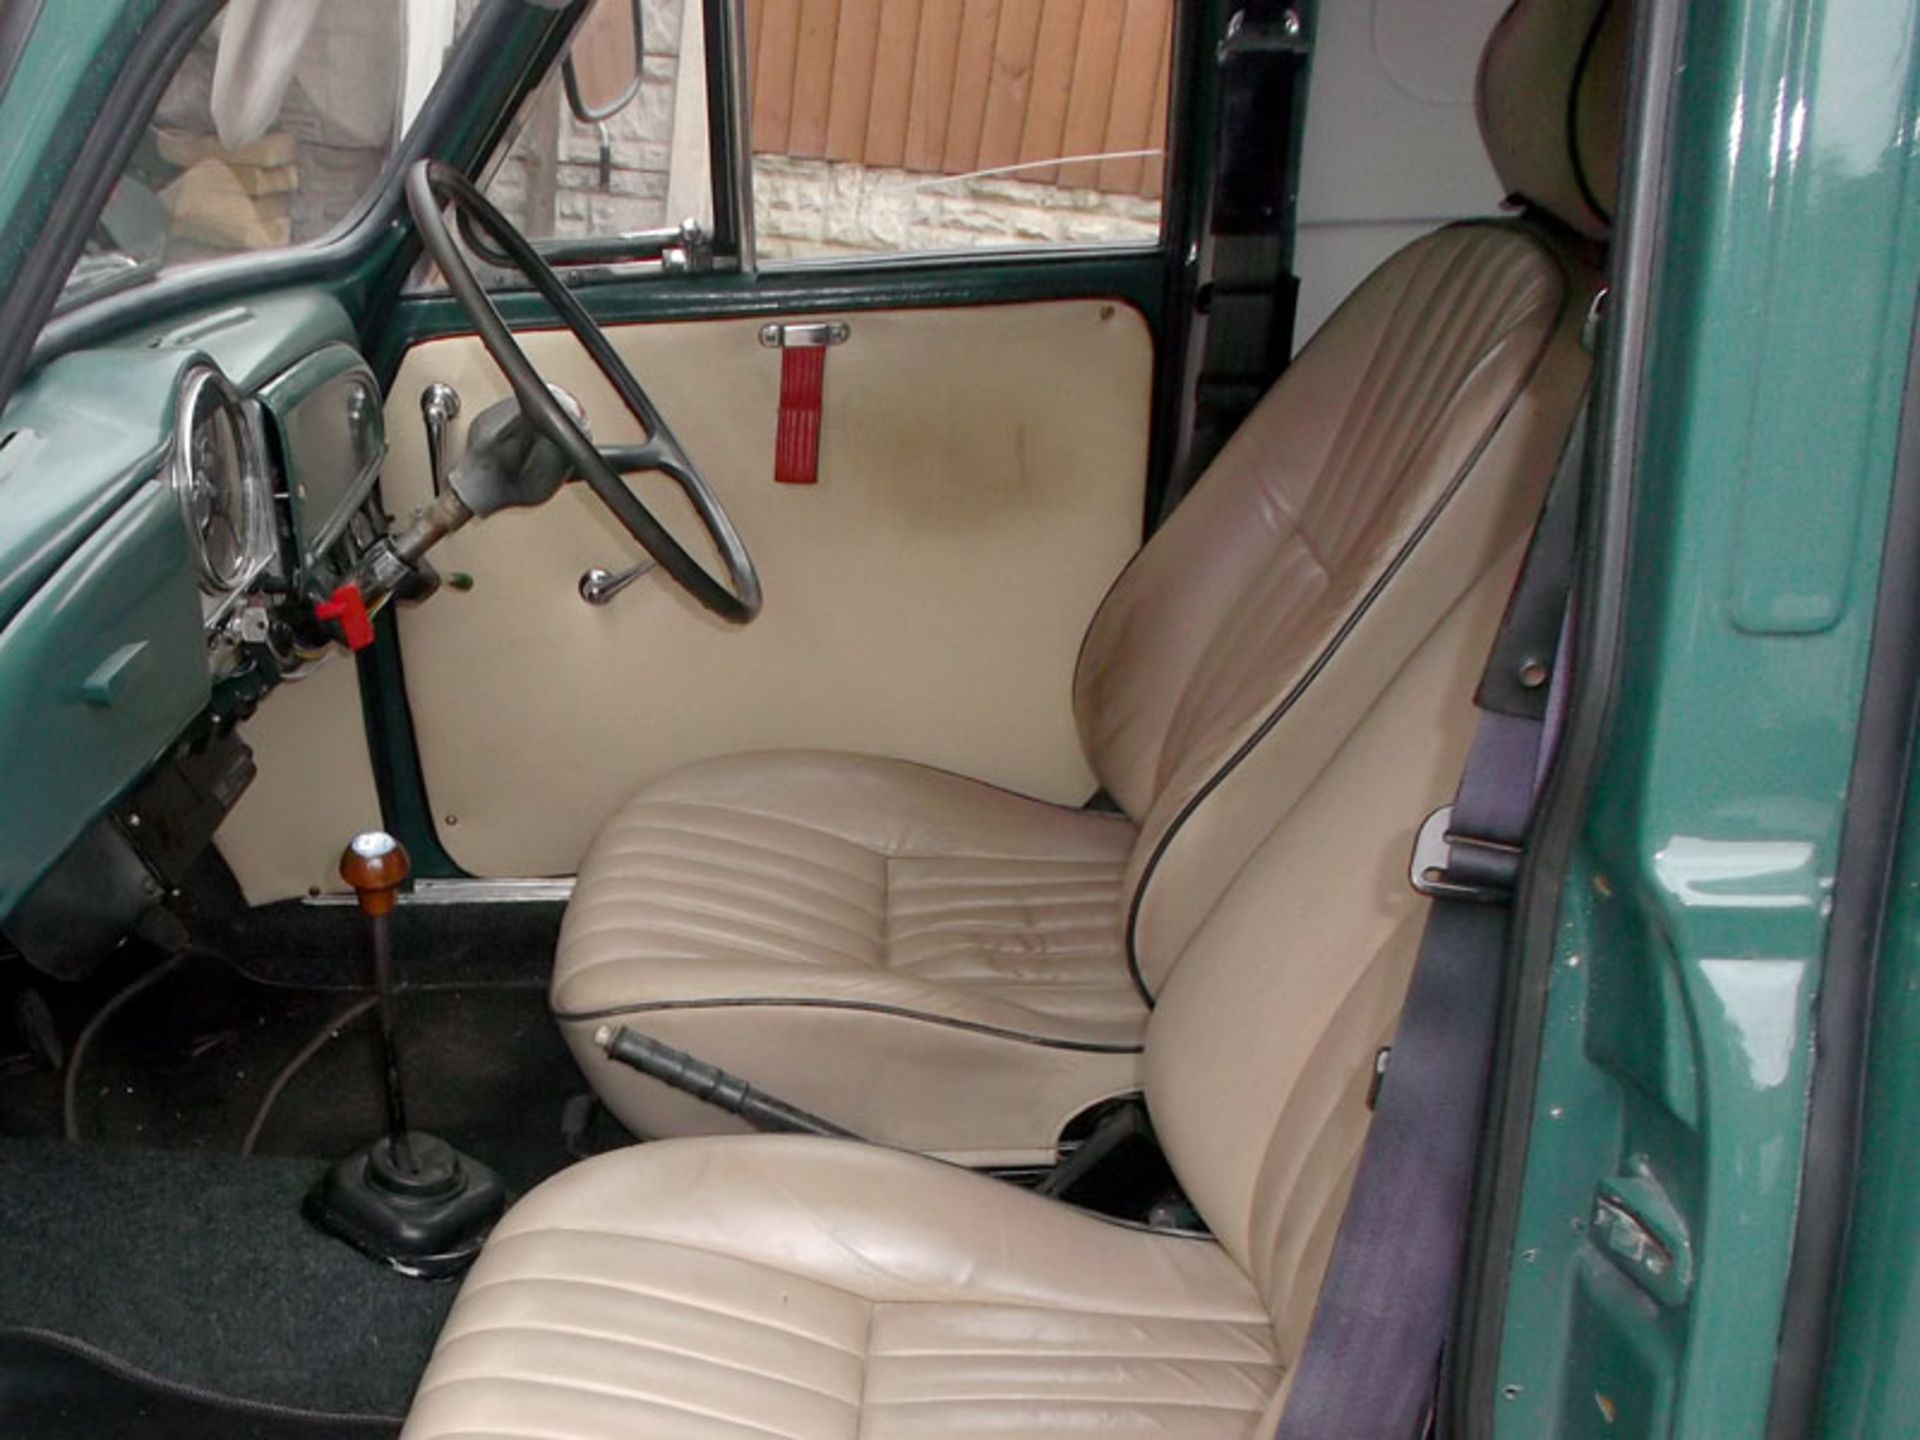 1969 Morris Minor Van - Image 3 of 3